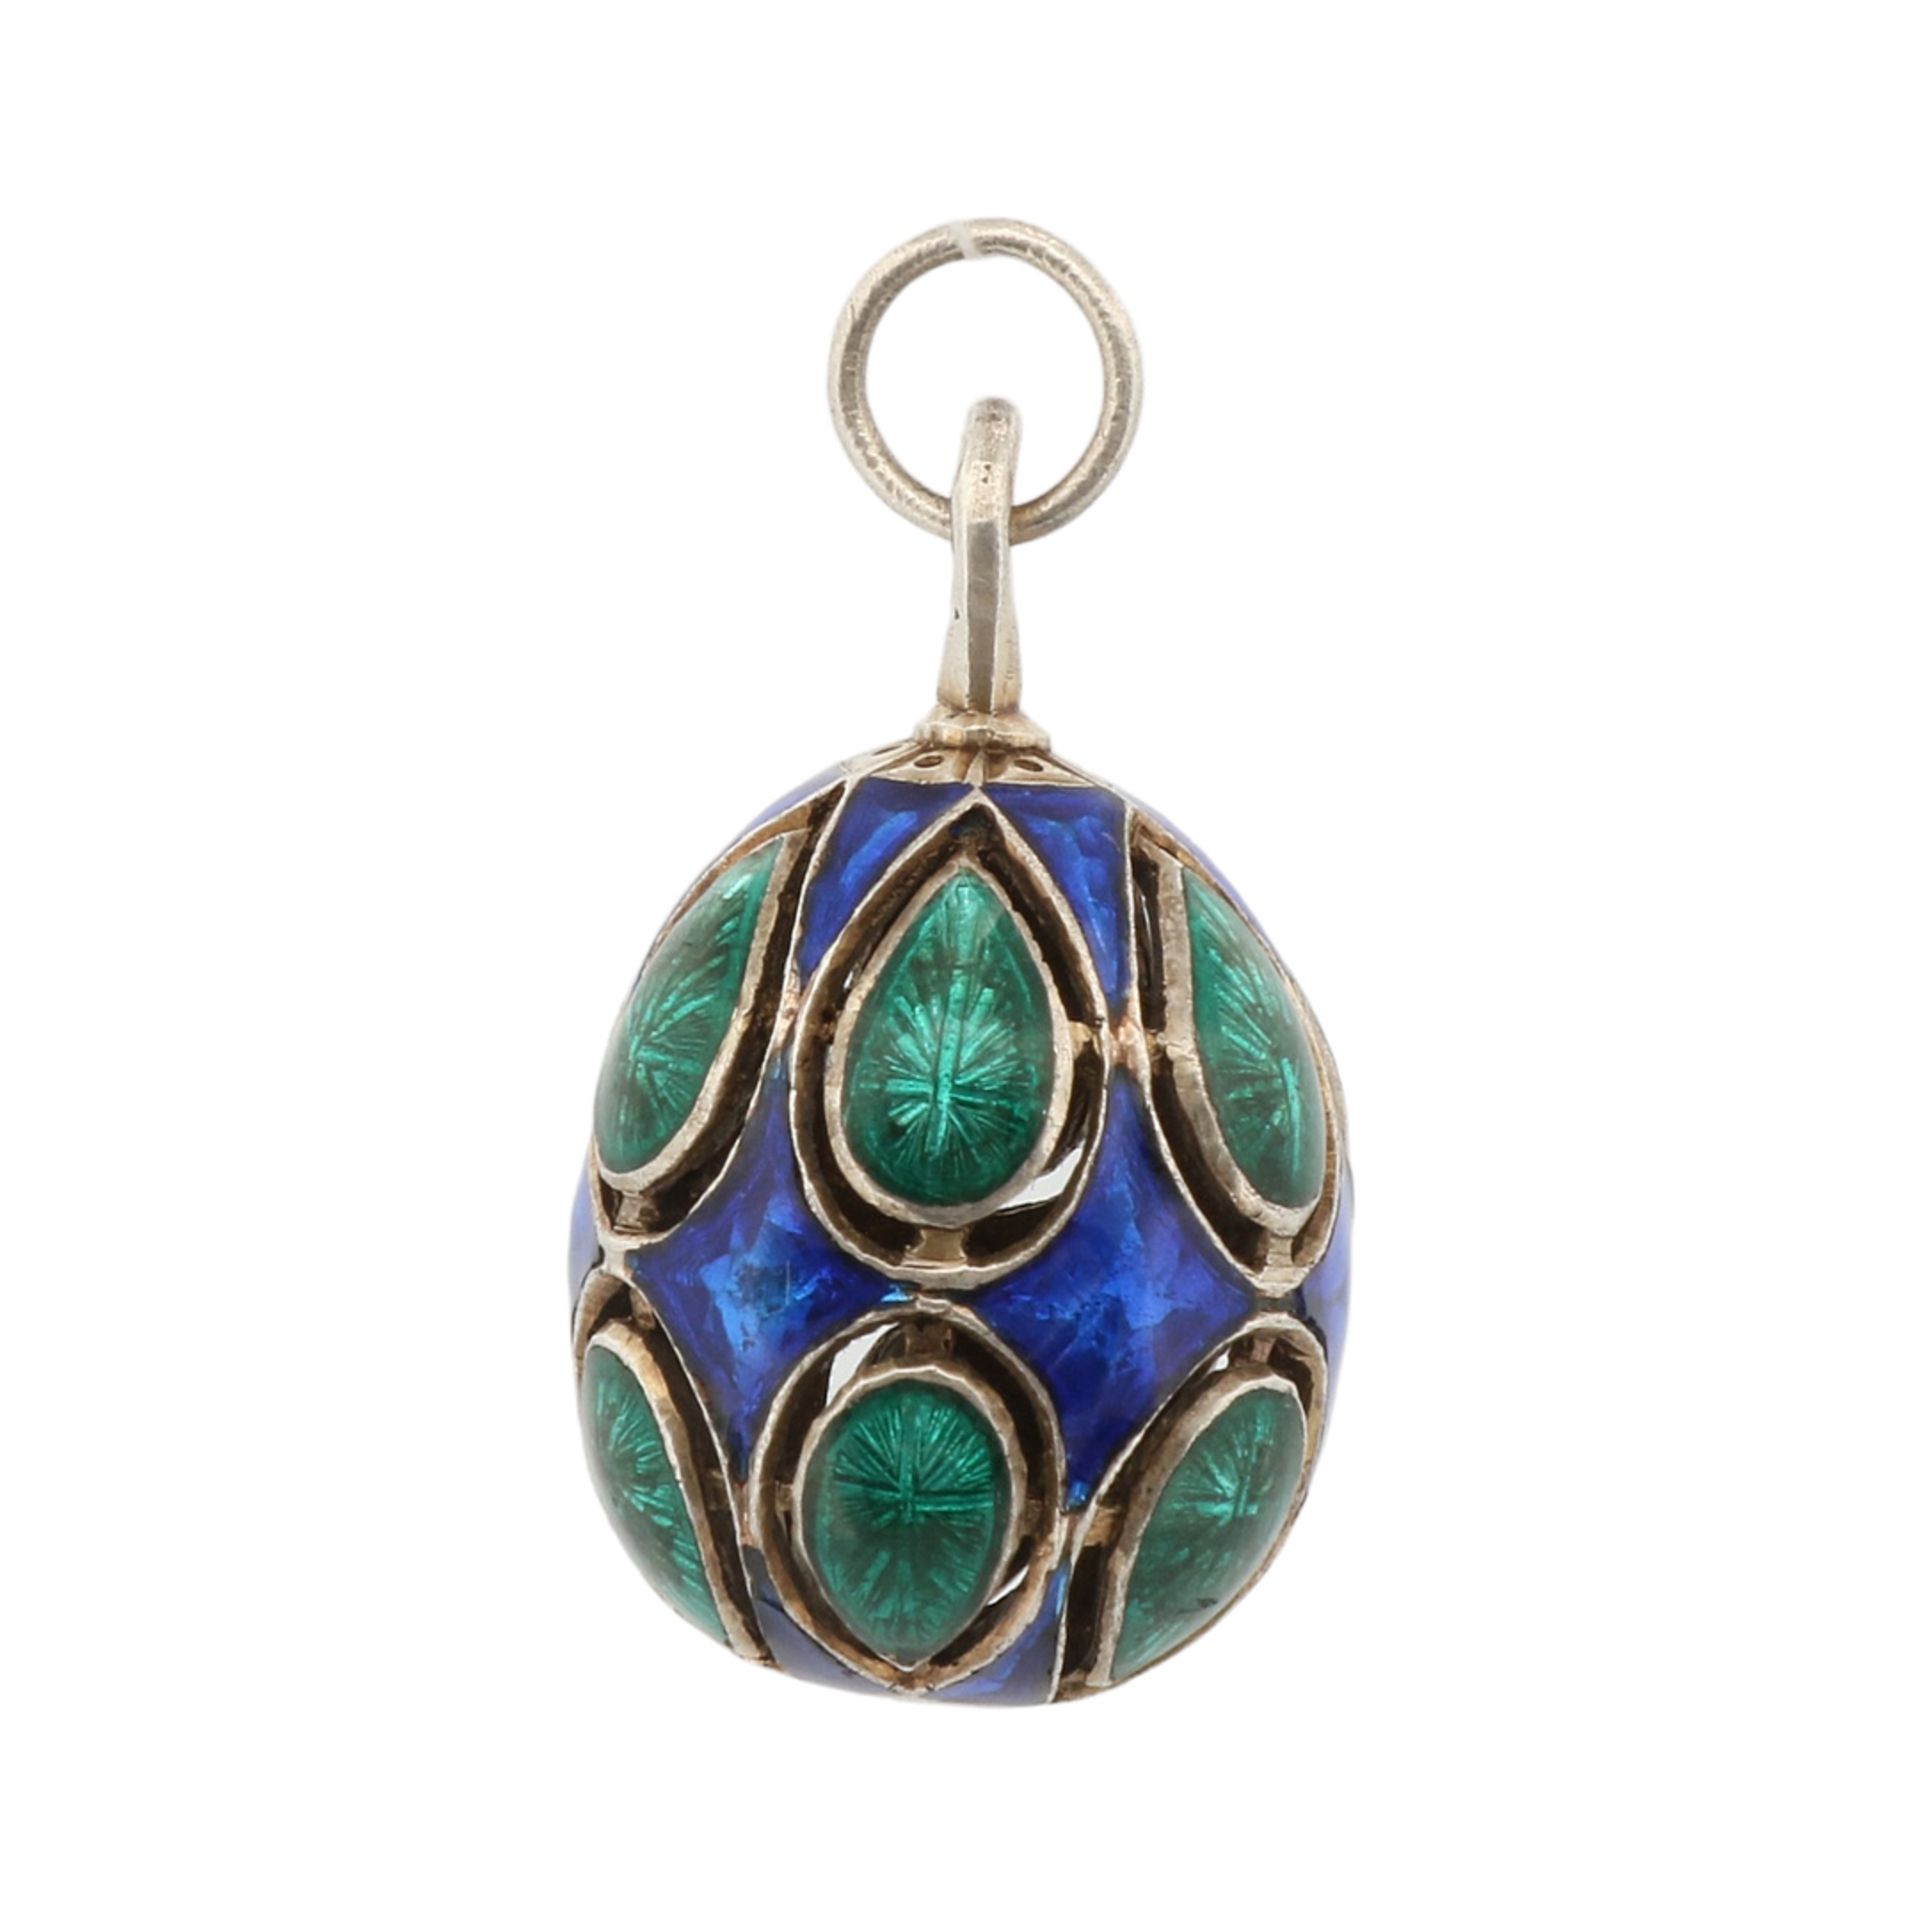 Egg-shaped pendant with Fabergé-style enamel - Image 2 of 4